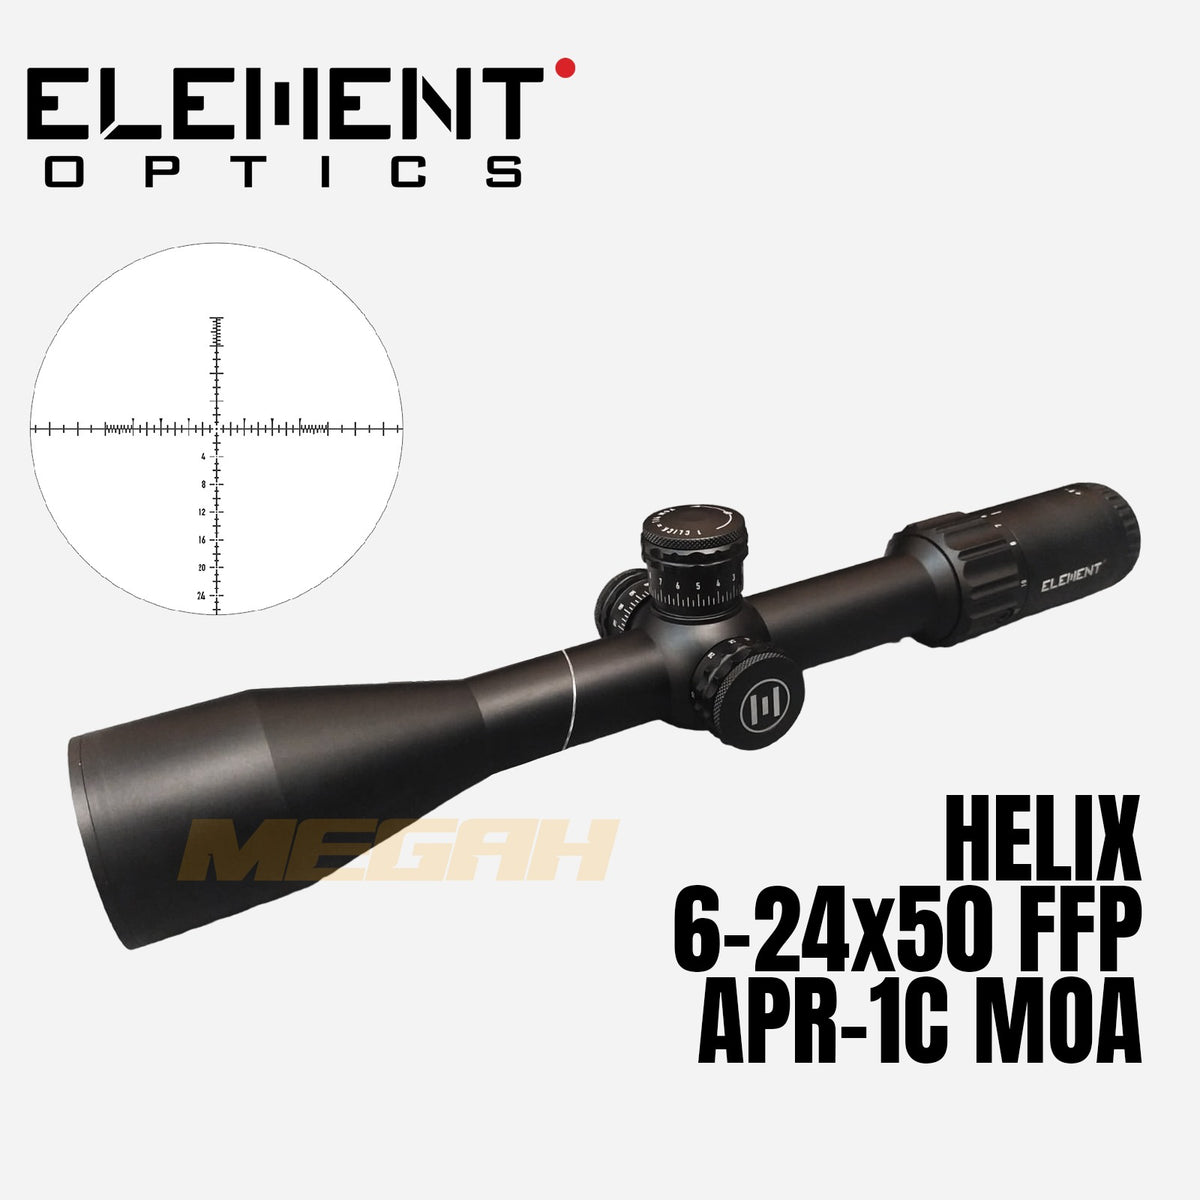 ELEMENT OPTICS HELIX 6-24x50 FFP MOA